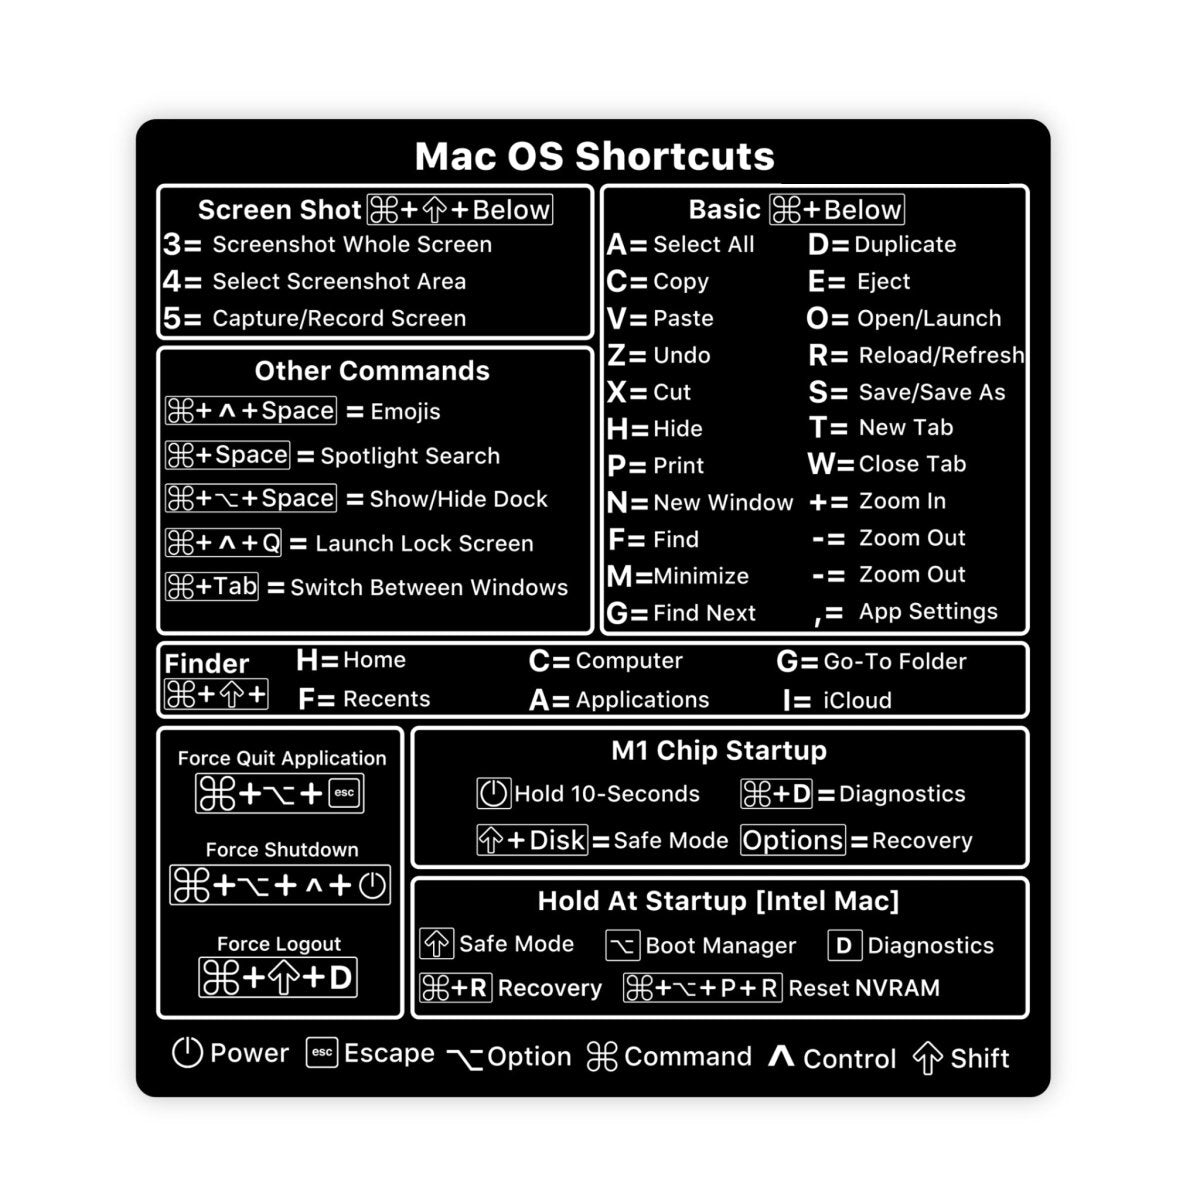 [M1/M2/Intel] Pink Mac OS Shortcut Sticker [Works With All Mac Laptops] - stickerbull[M1/M2/Intel] Pink Mac OS Shortcut Sticker [Works With All Mac Laptops]Retail StickerstickerbullstickerbullTaylor_BlackMac [#77]Black[M1/M2/Intel] Pink Mac OS Shortcut Sticker [Works With All Mac Laptops]